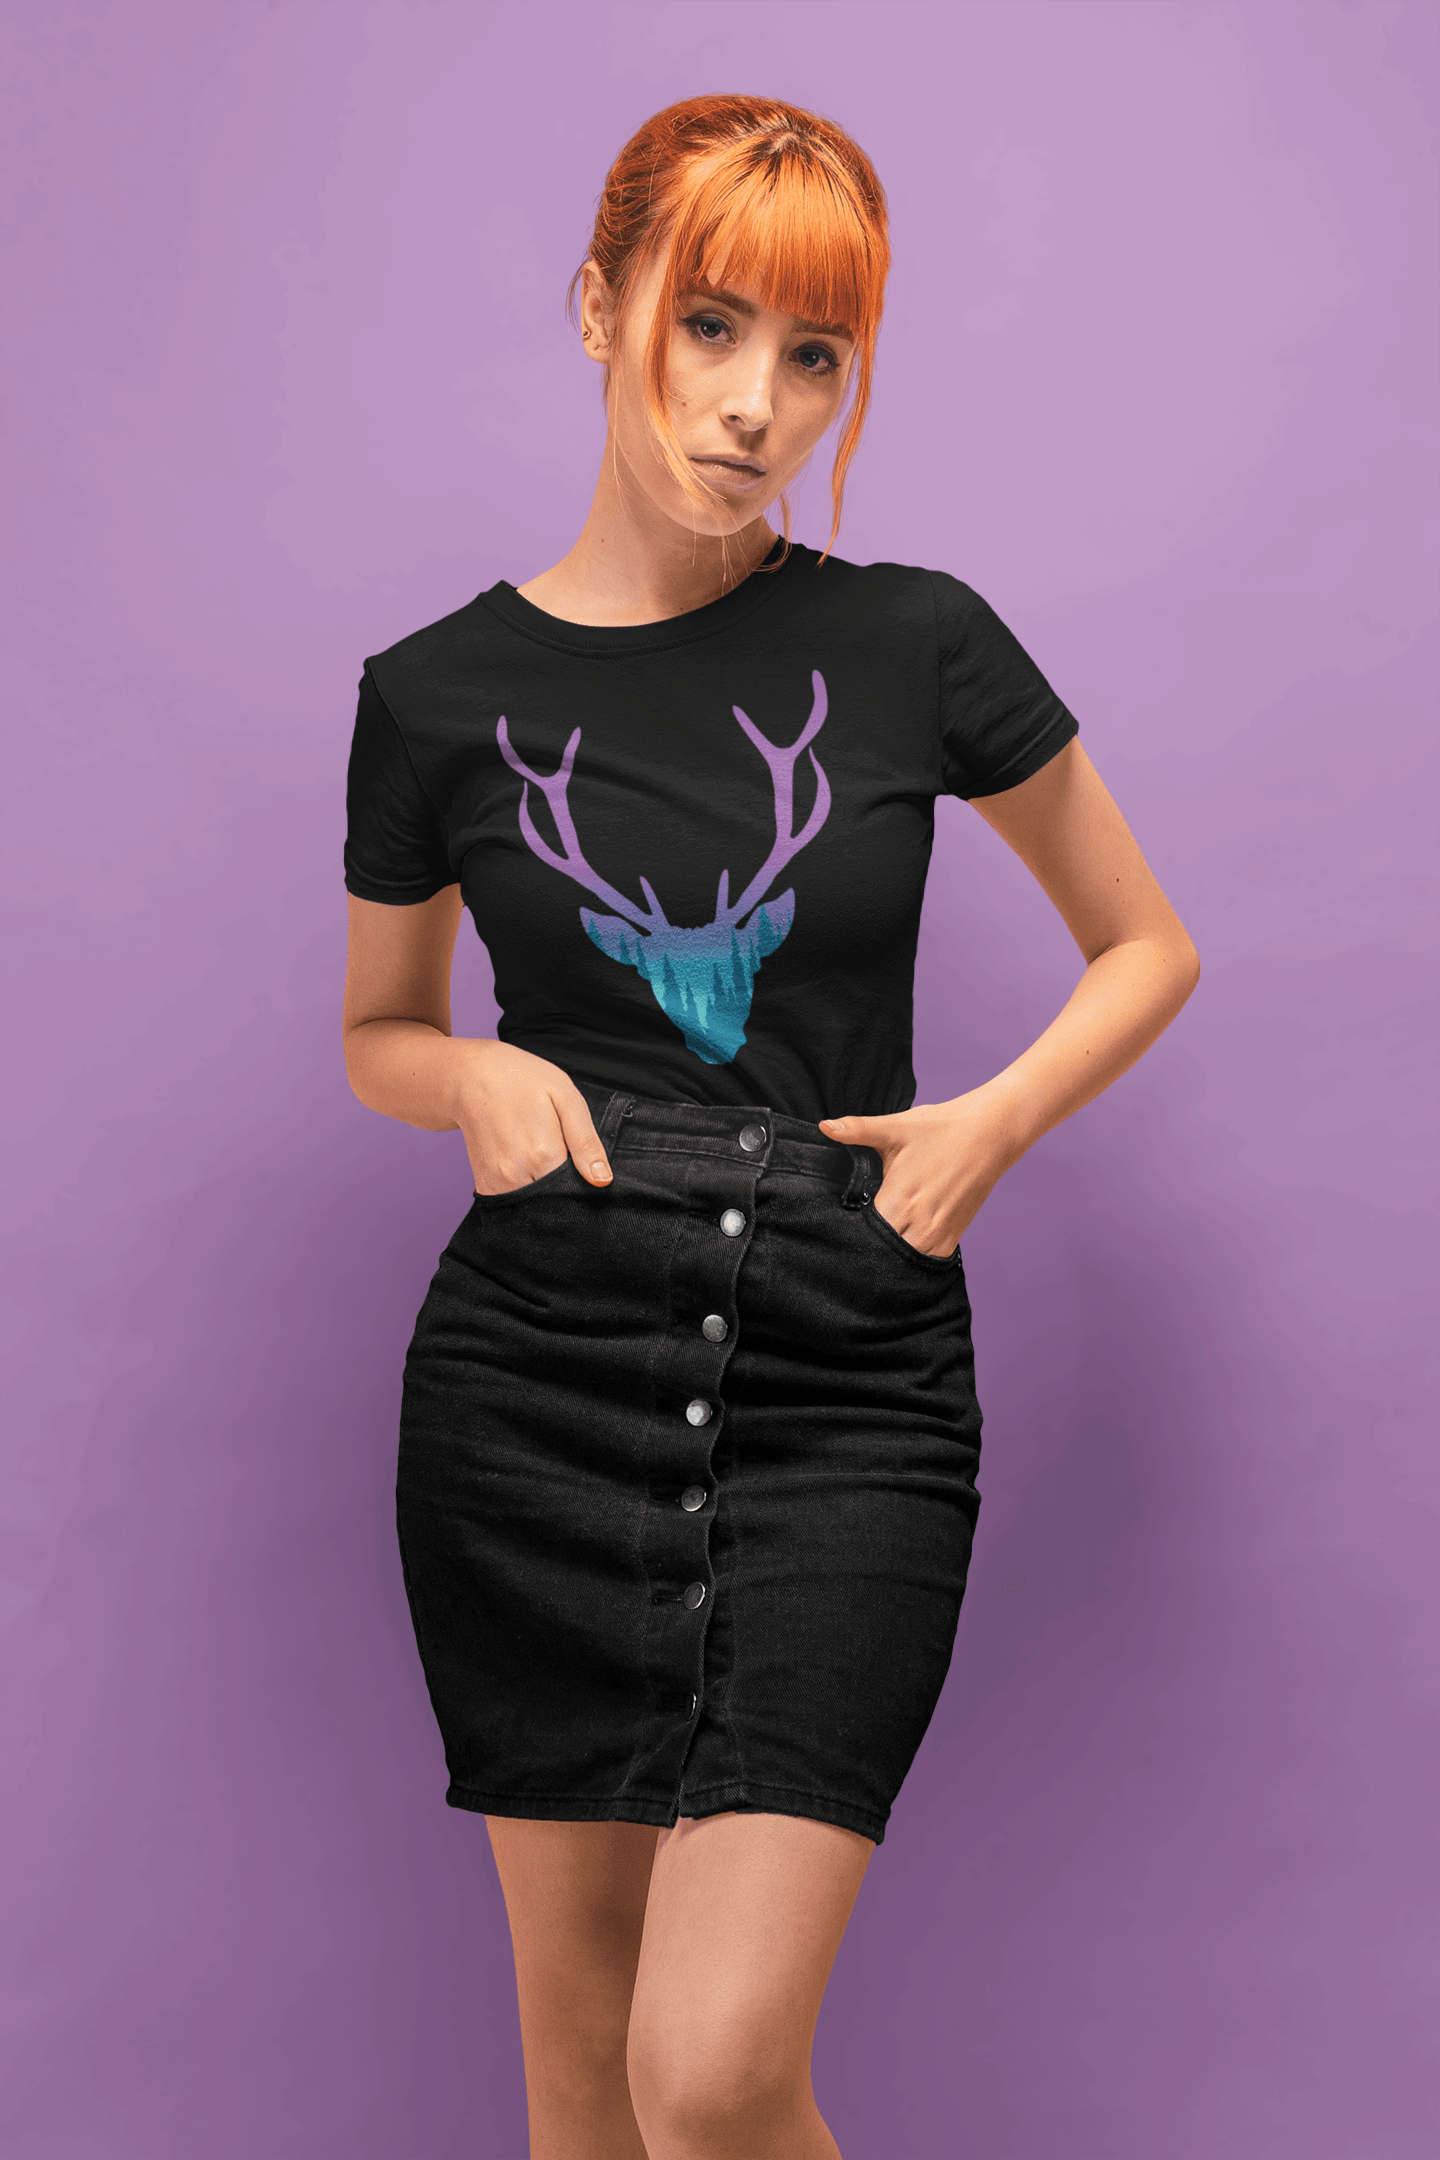 Deer Head Black T-Shirt For Women - ATOM